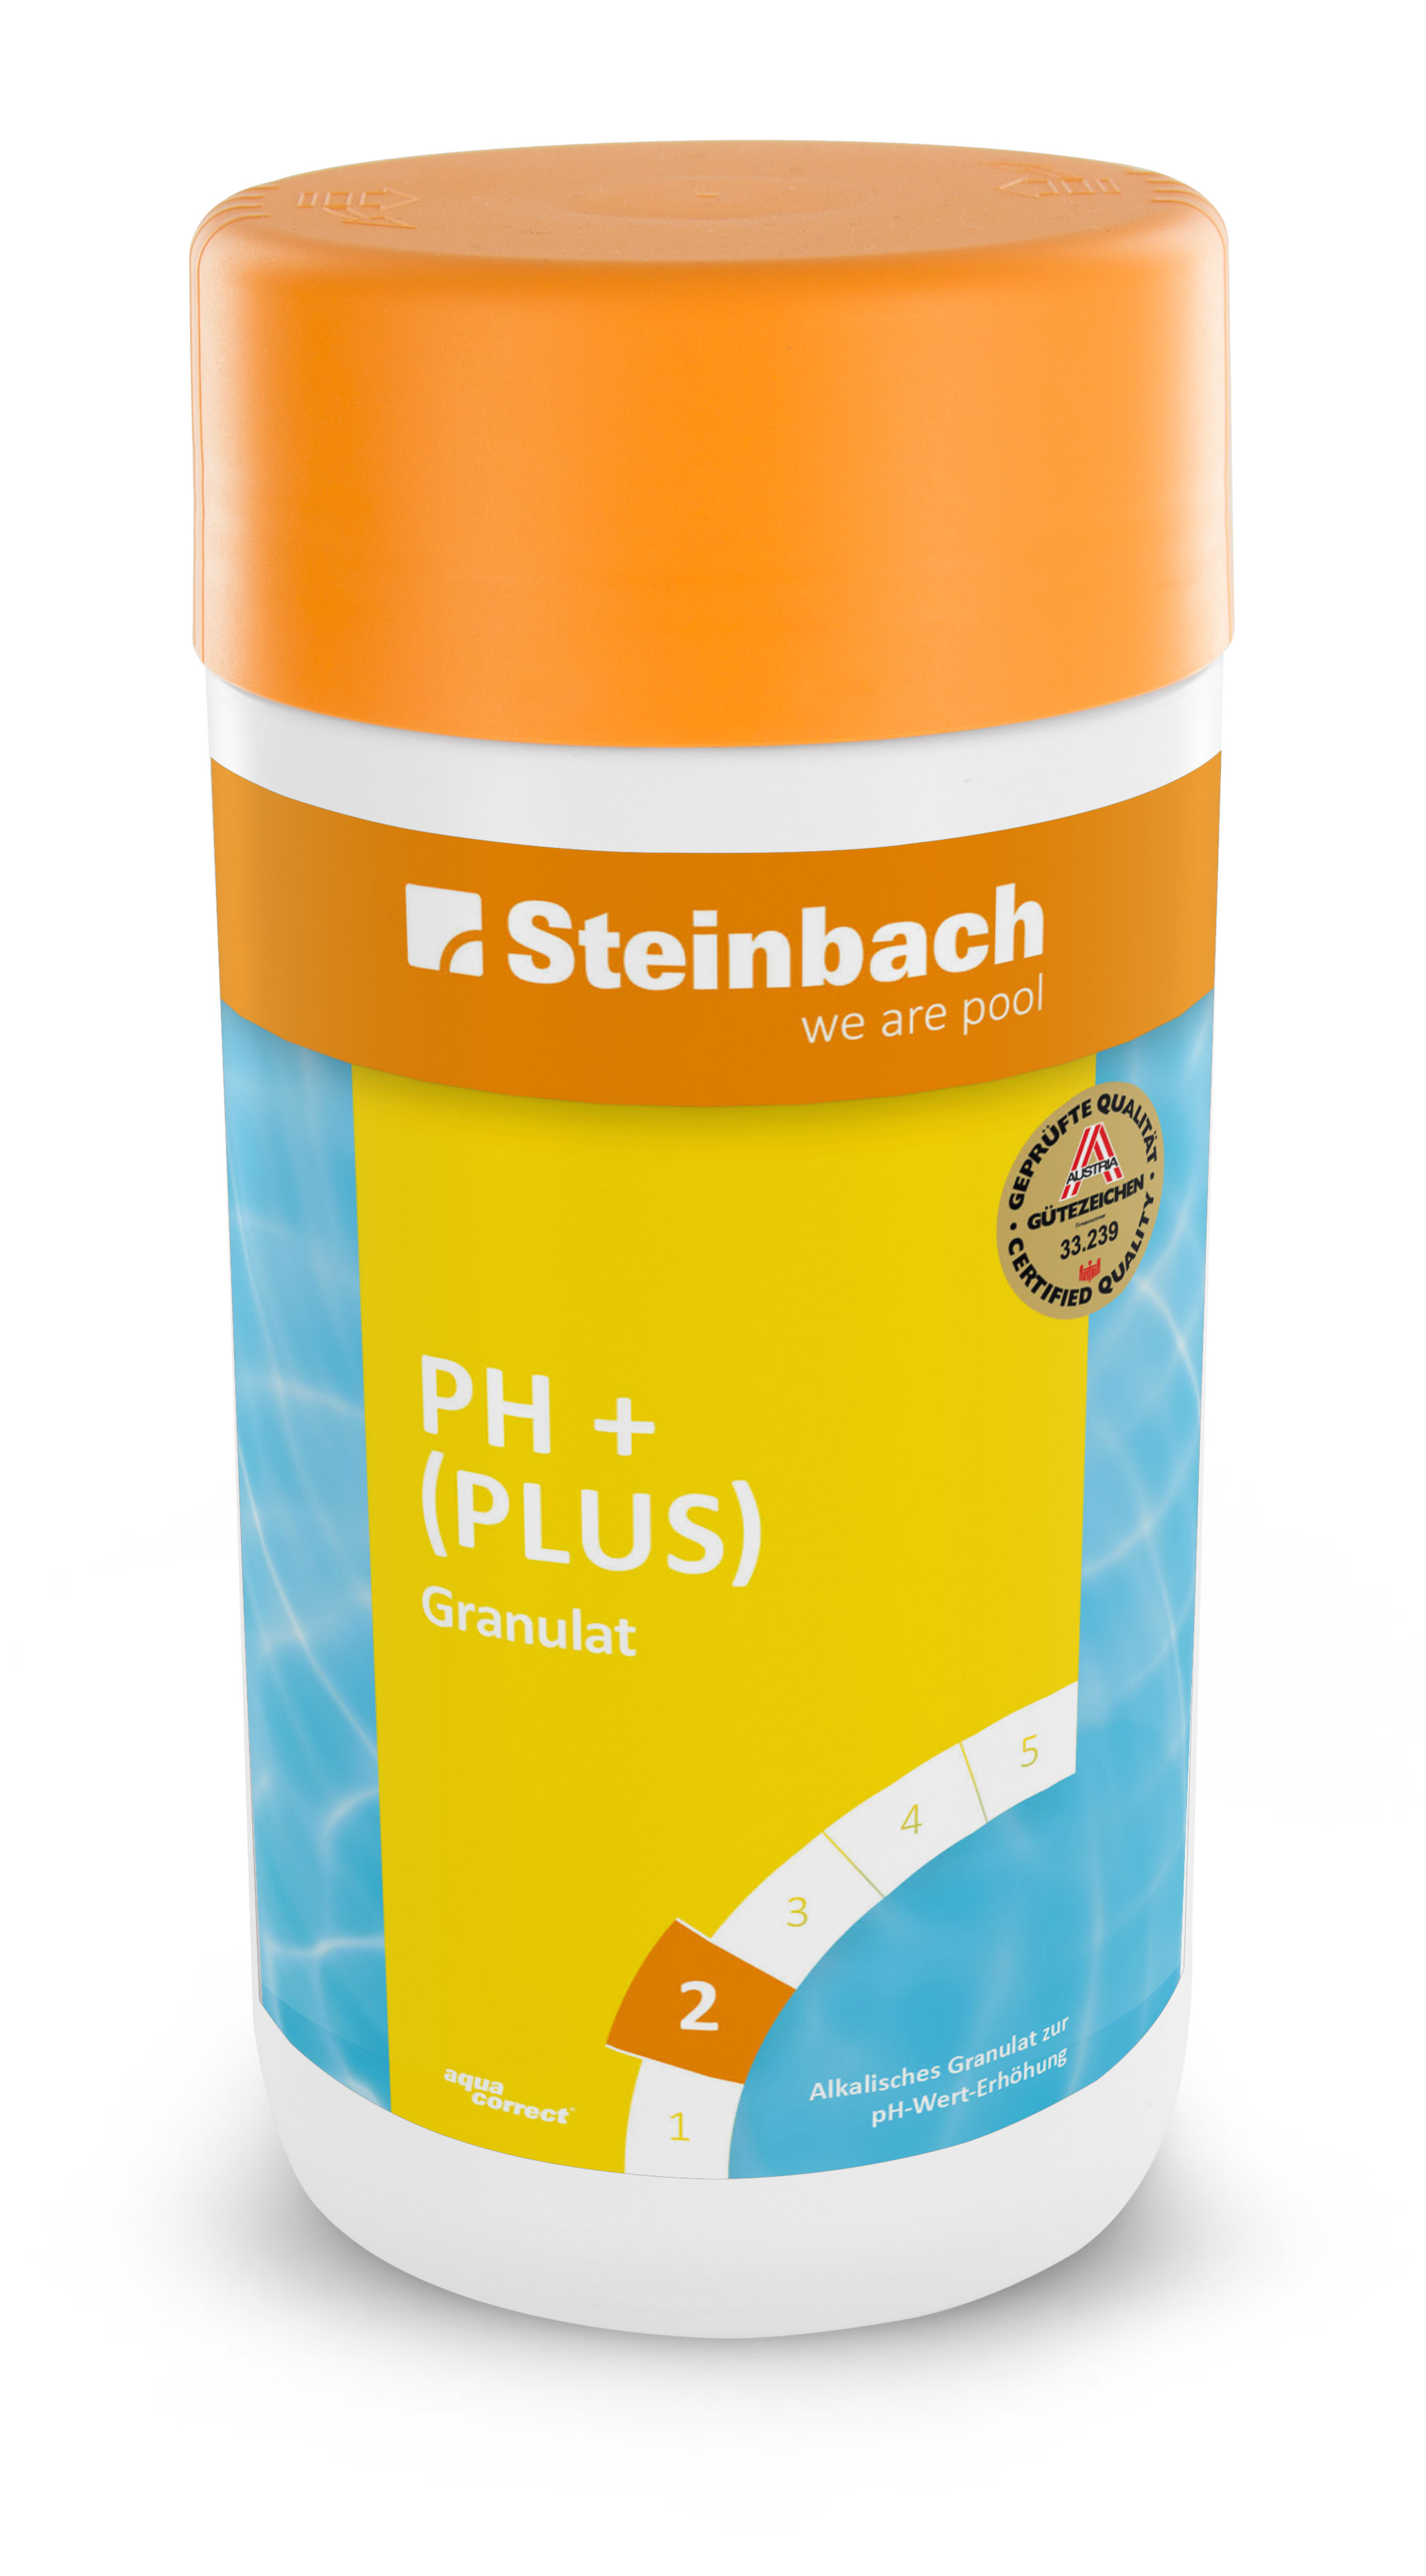 Steinbach pH + (plus) Granulat, 1 kg